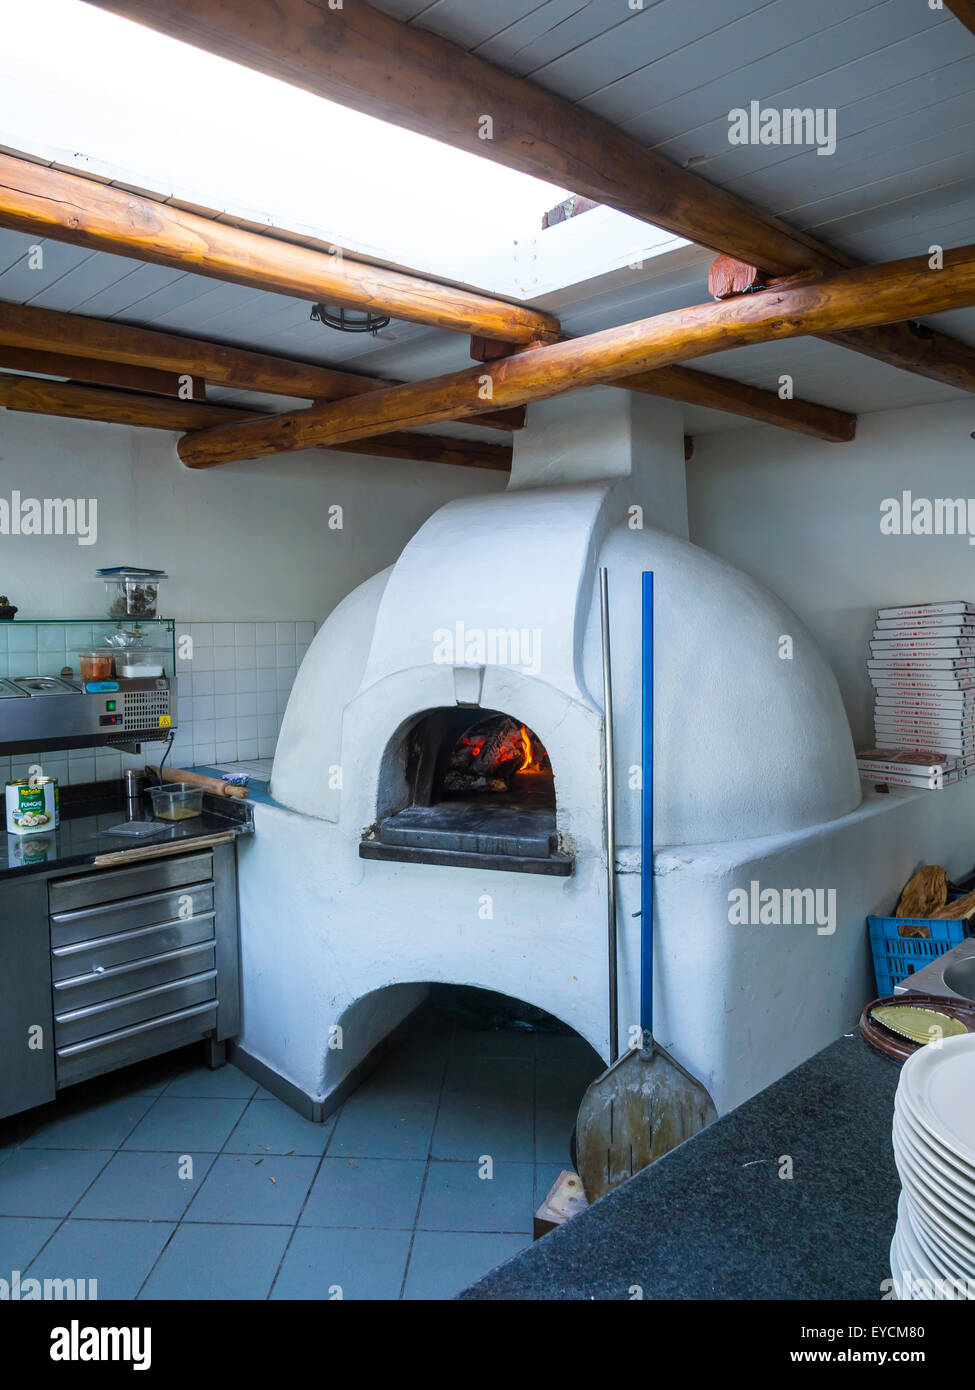 Italy, Sicily, Stromboli, typical pizza oven Stock Photo